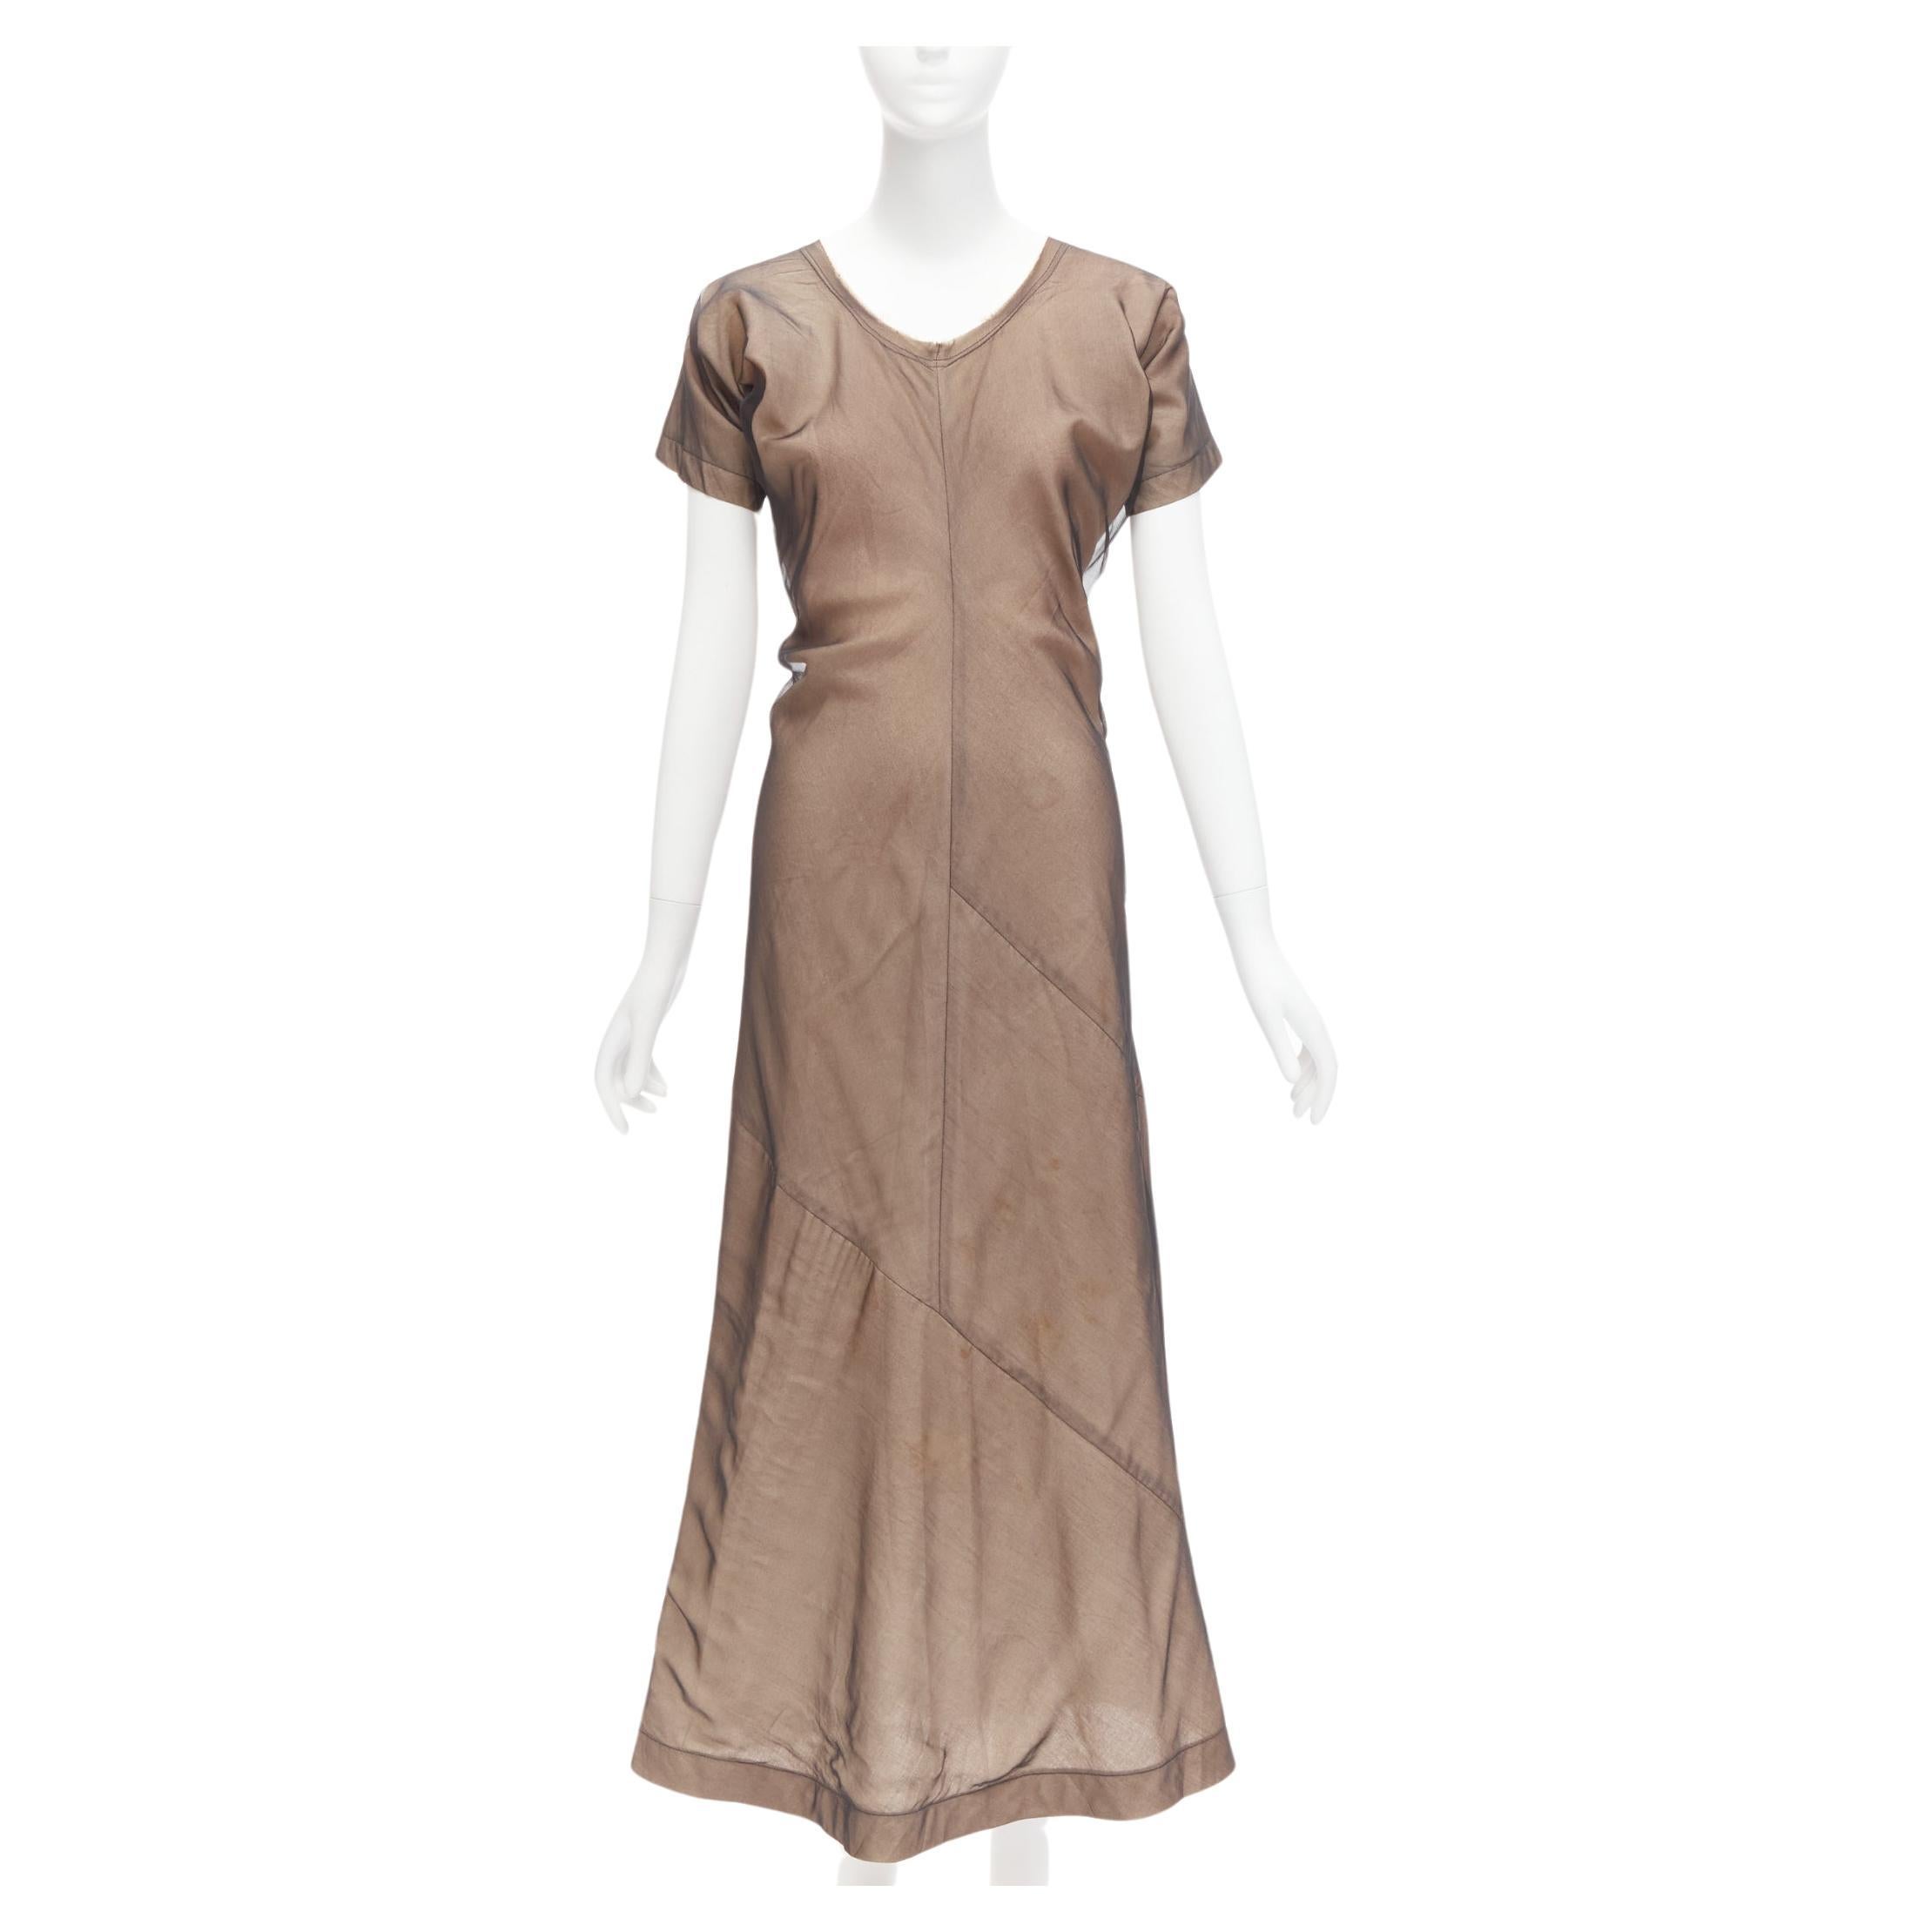 COMME DES GARCONS Vintage nude sheer overlay A-line bias dress S Cindy Sherman For Sale